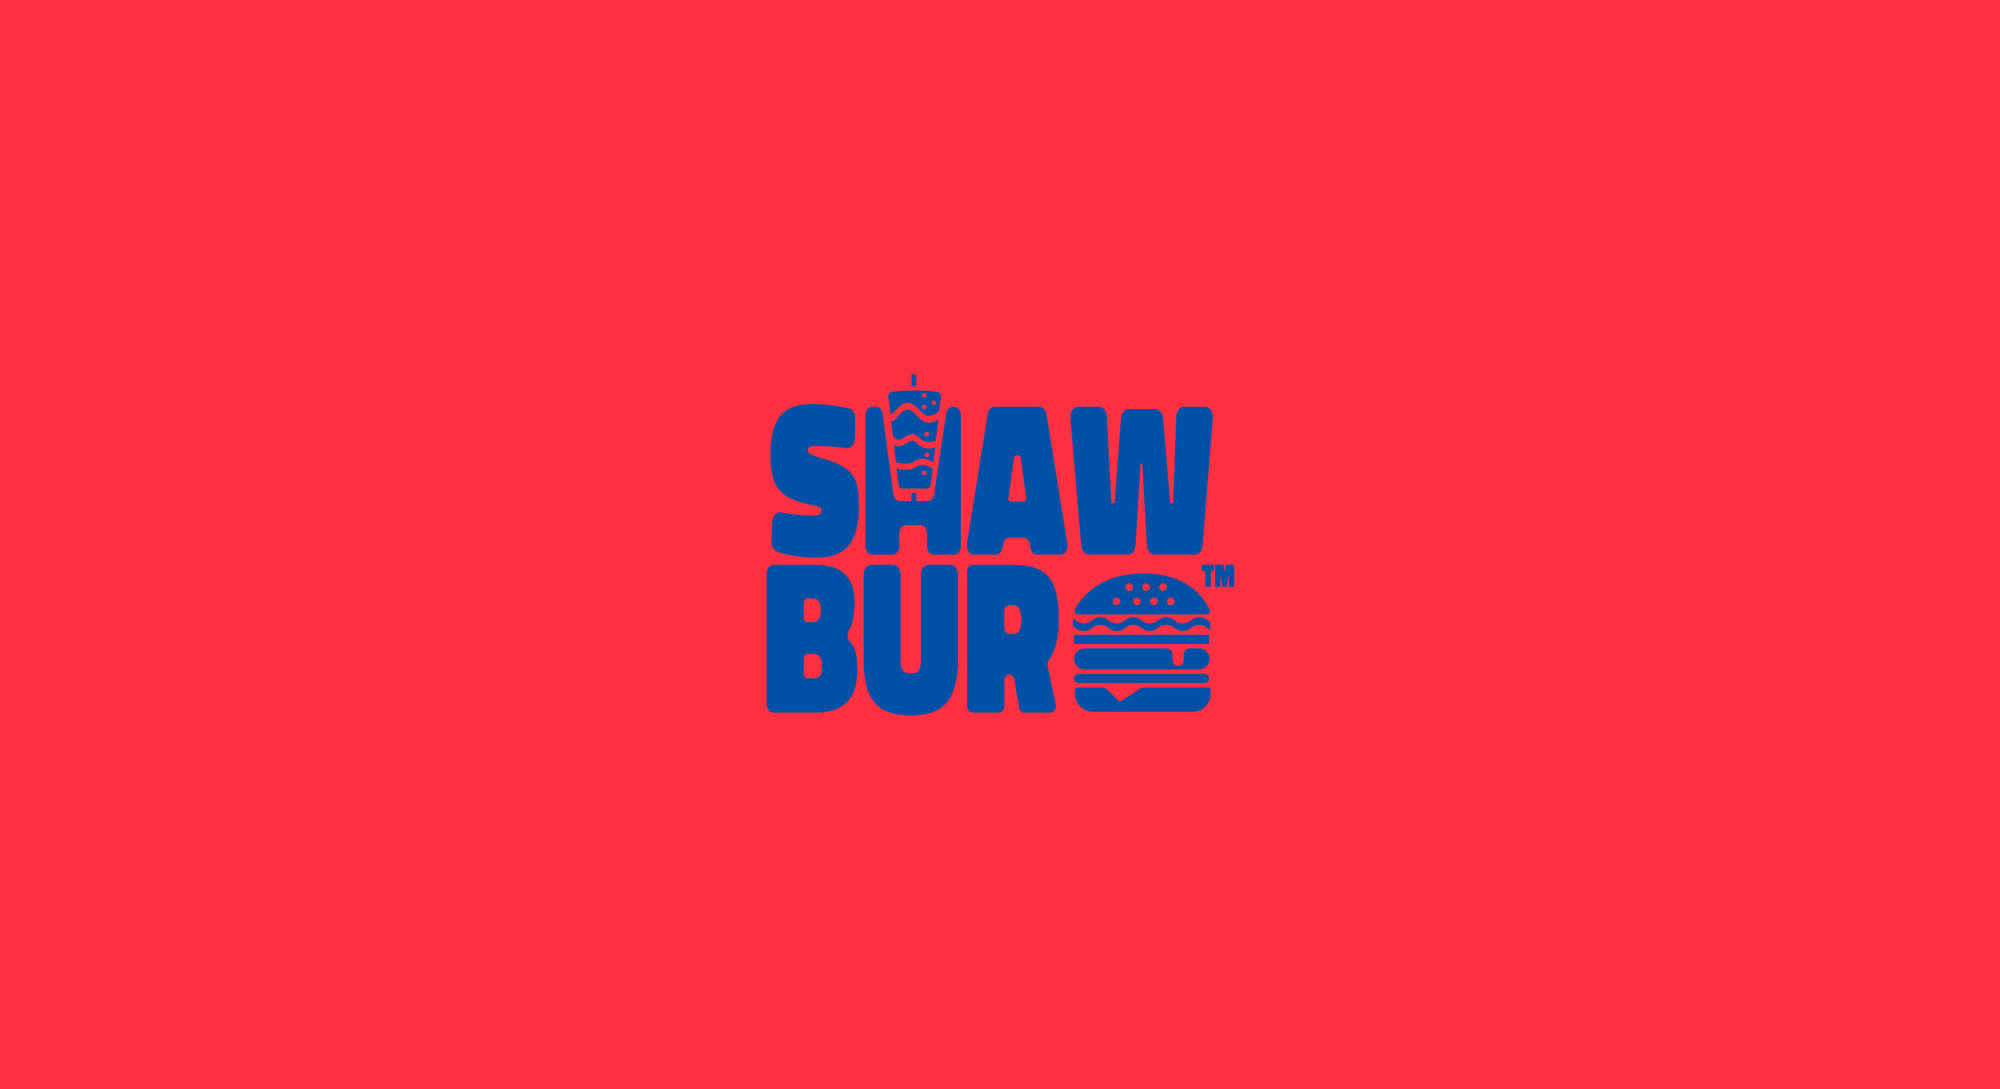 Shaw-bur汉堡餐厅品牌VI设计